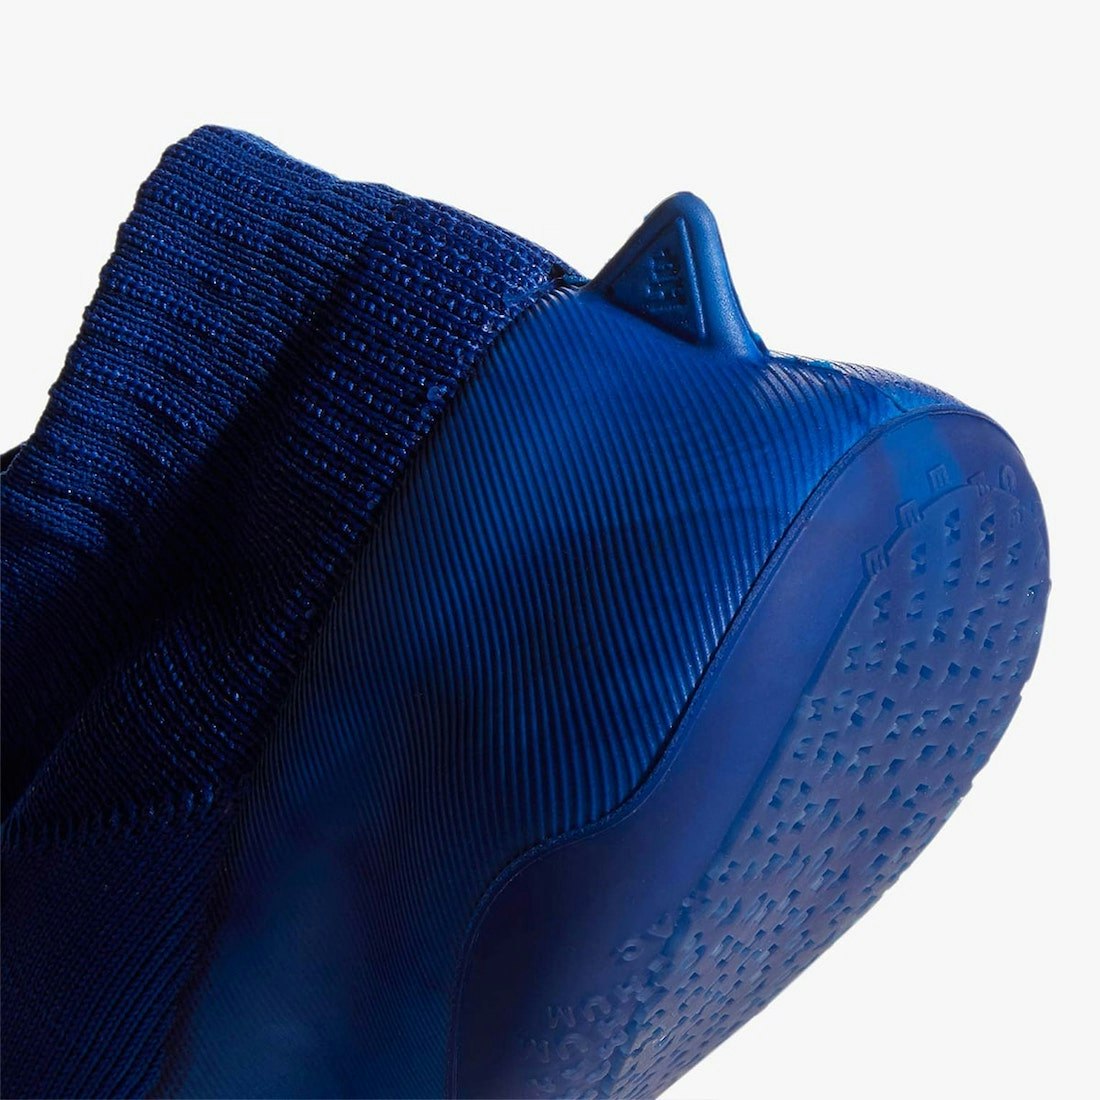 Pharrell Williams x adidas Humanrace Sichona “Royal Blue”